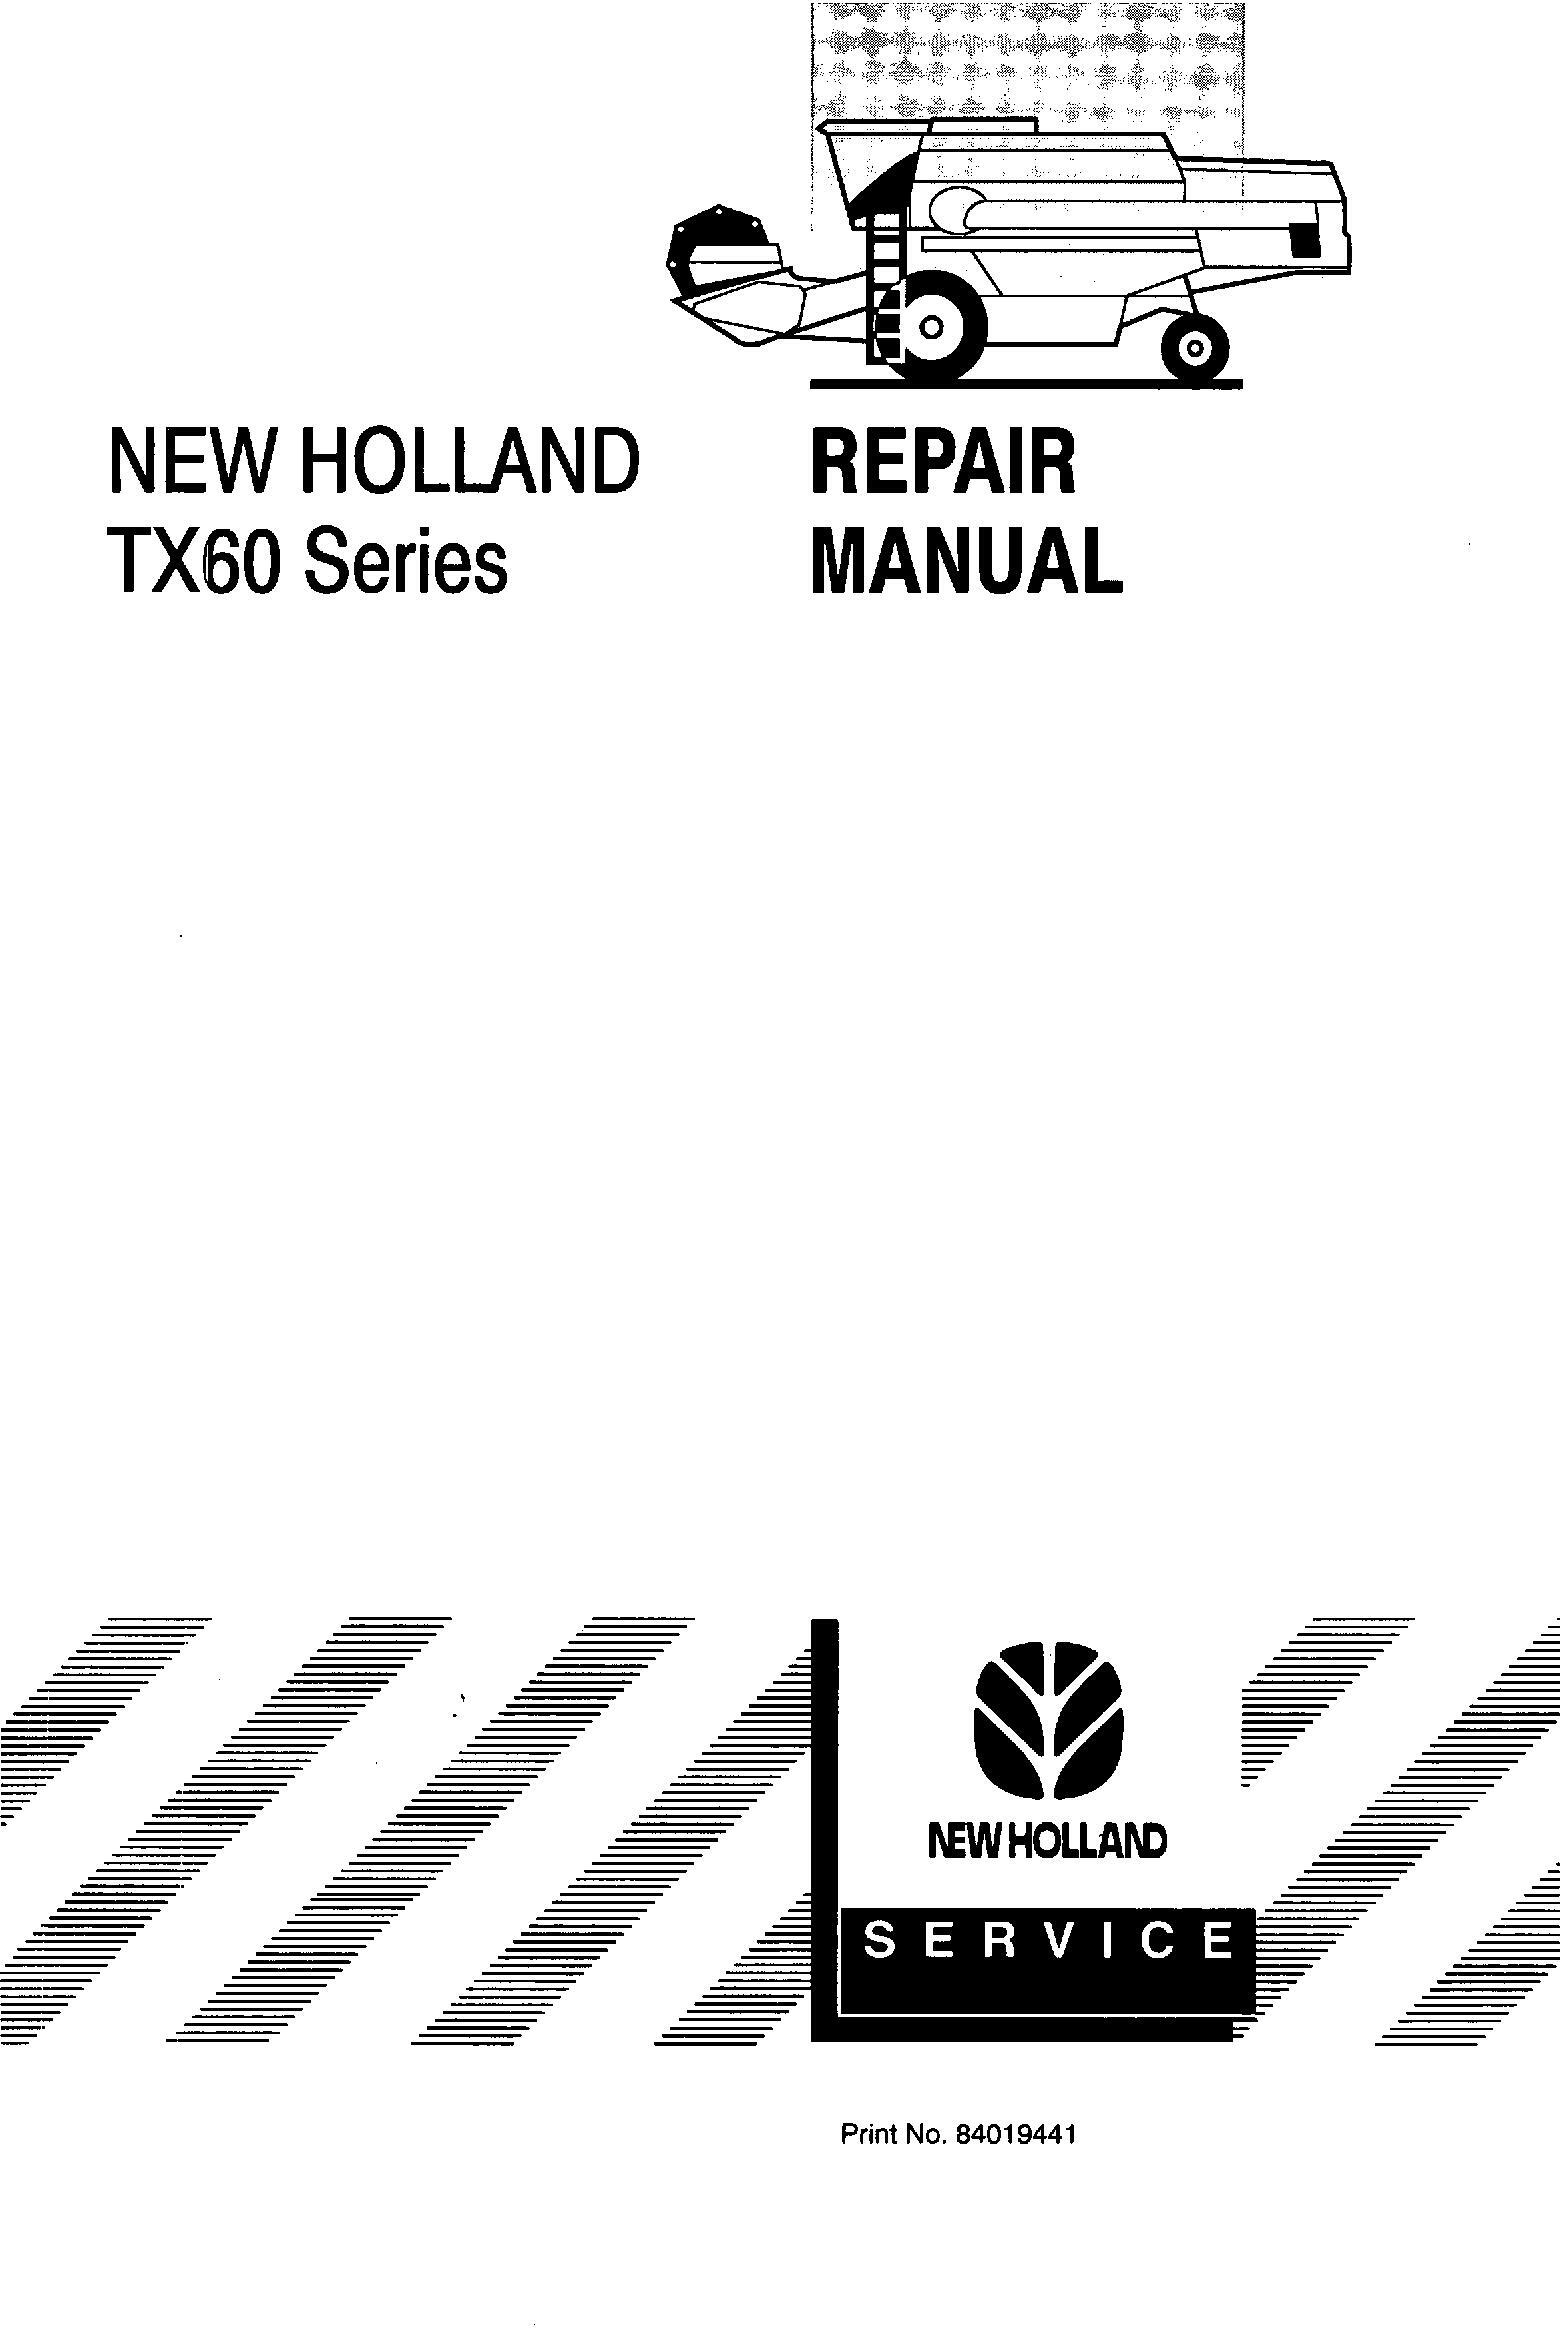 New Holland TX60, TX62, TX63, TX64, TX65, TX66, TX67, TX68 Combines Service Manual - 20012